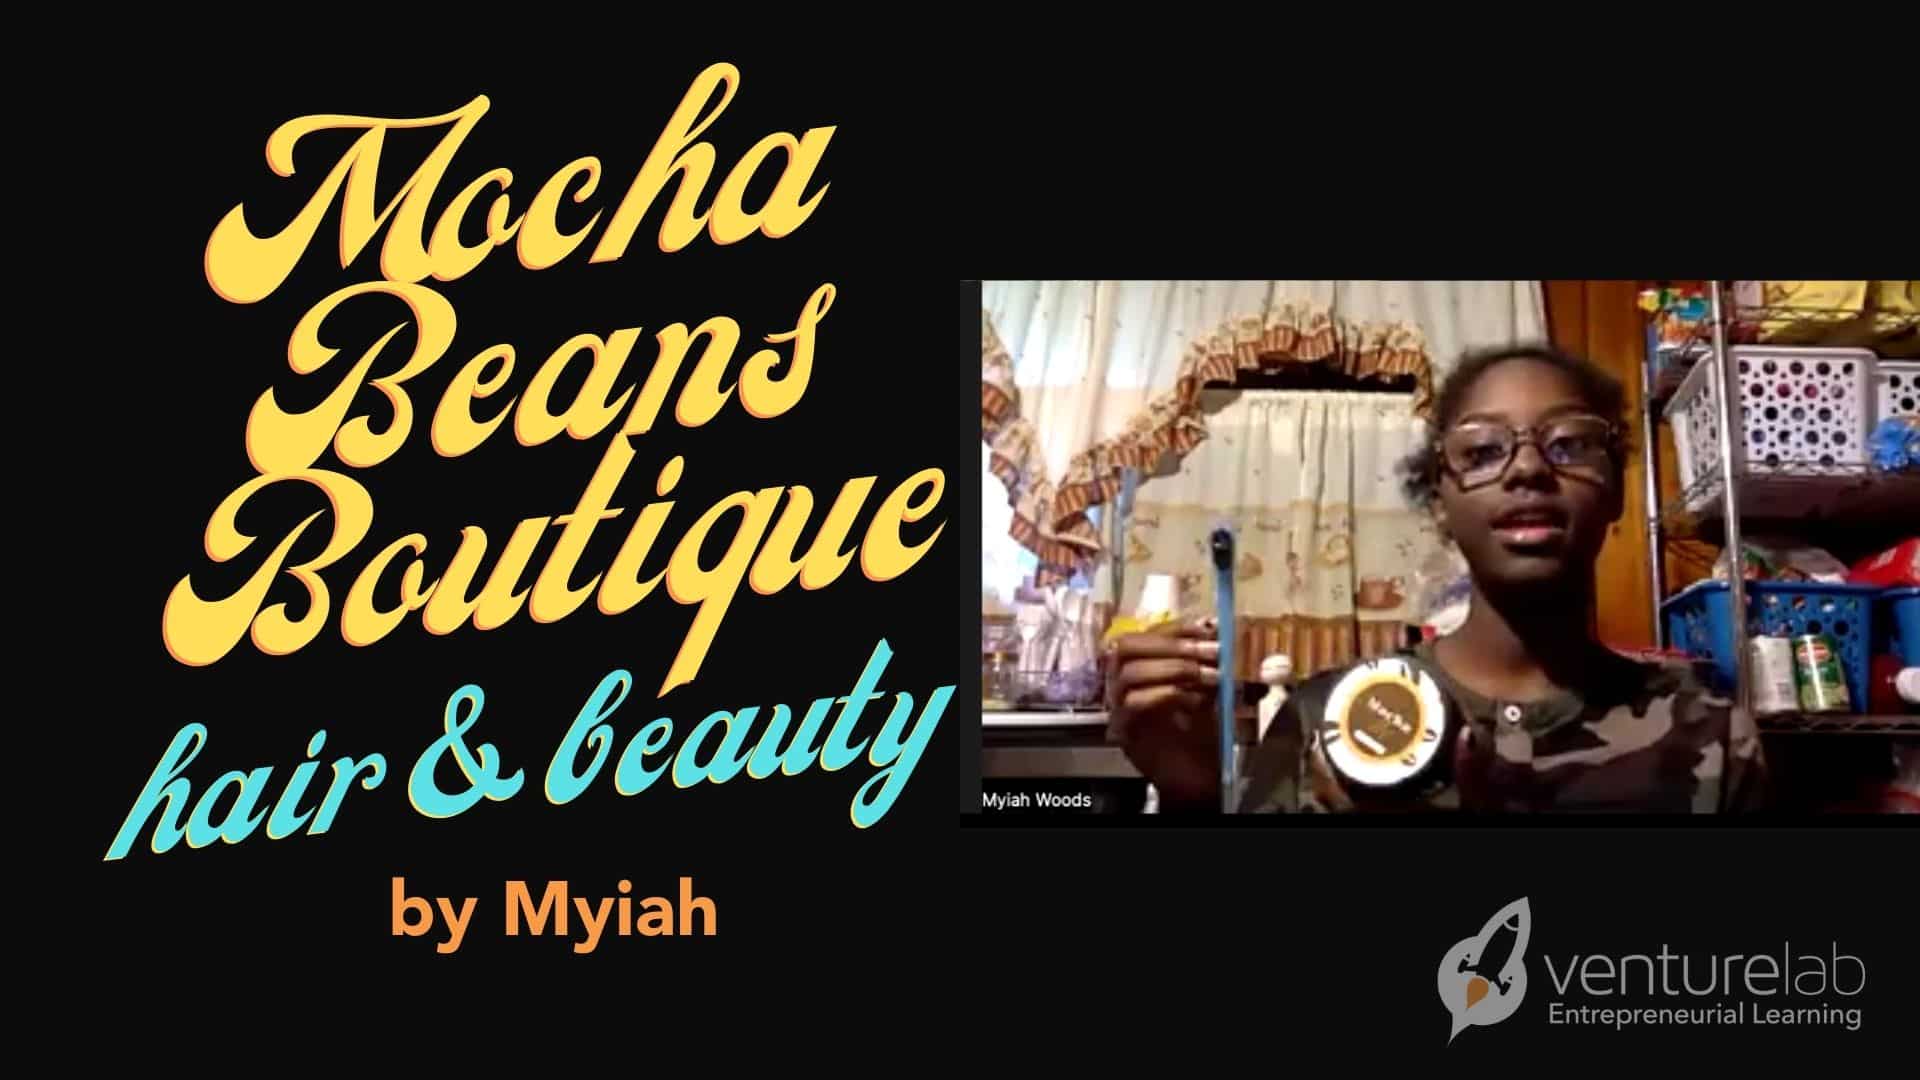 Youth Virtual Pitch: Mocha Beans Boutique